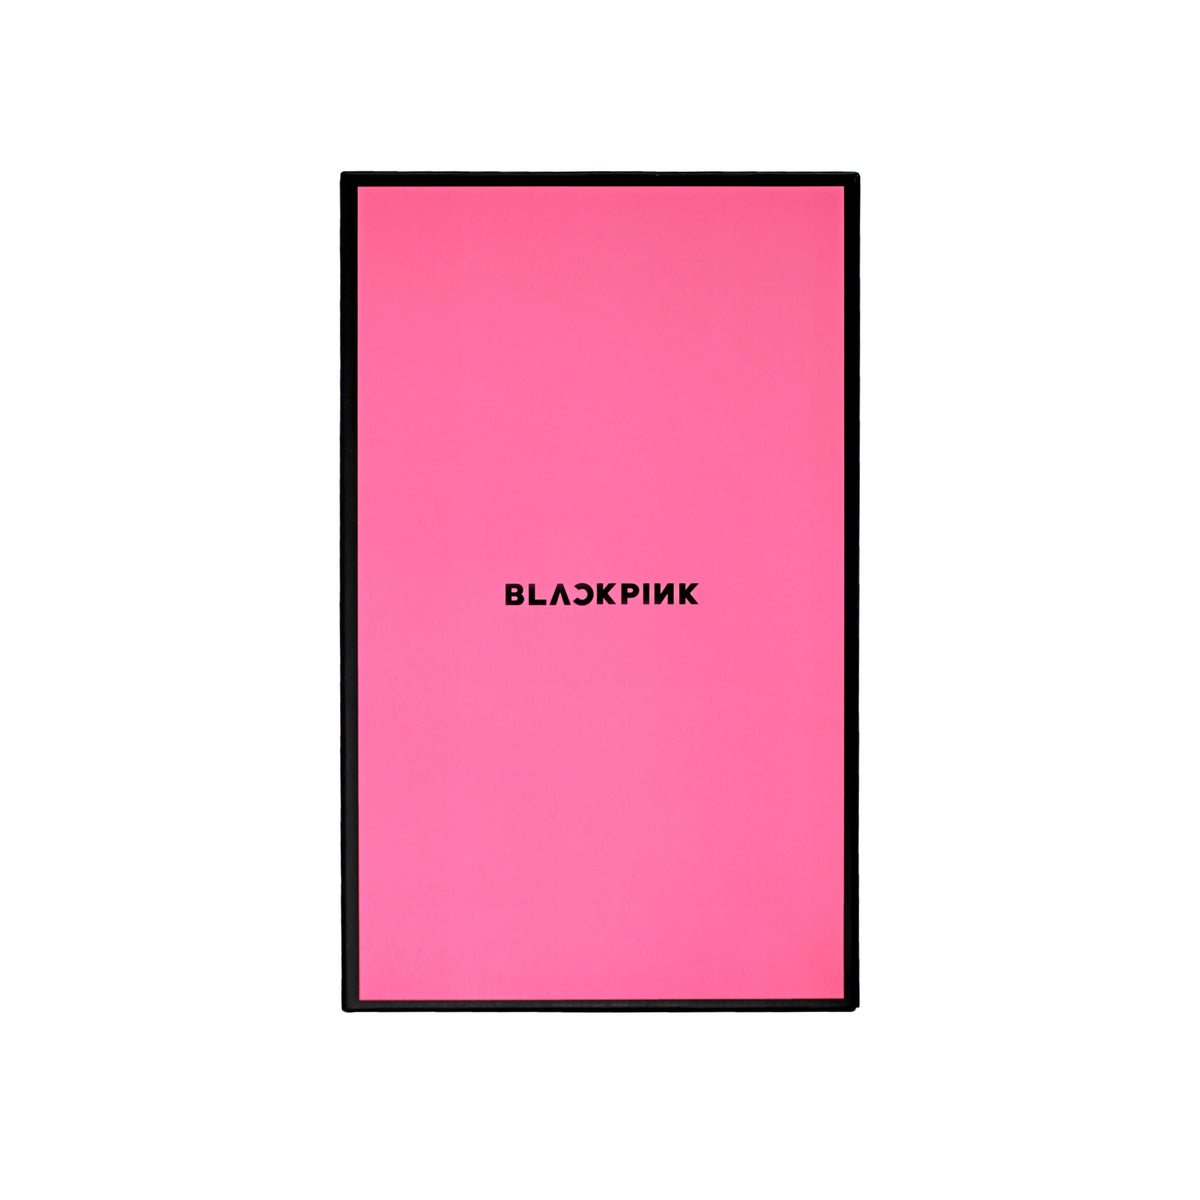 BLACKPINK - Official Light Stick Ver. 2 Main Image